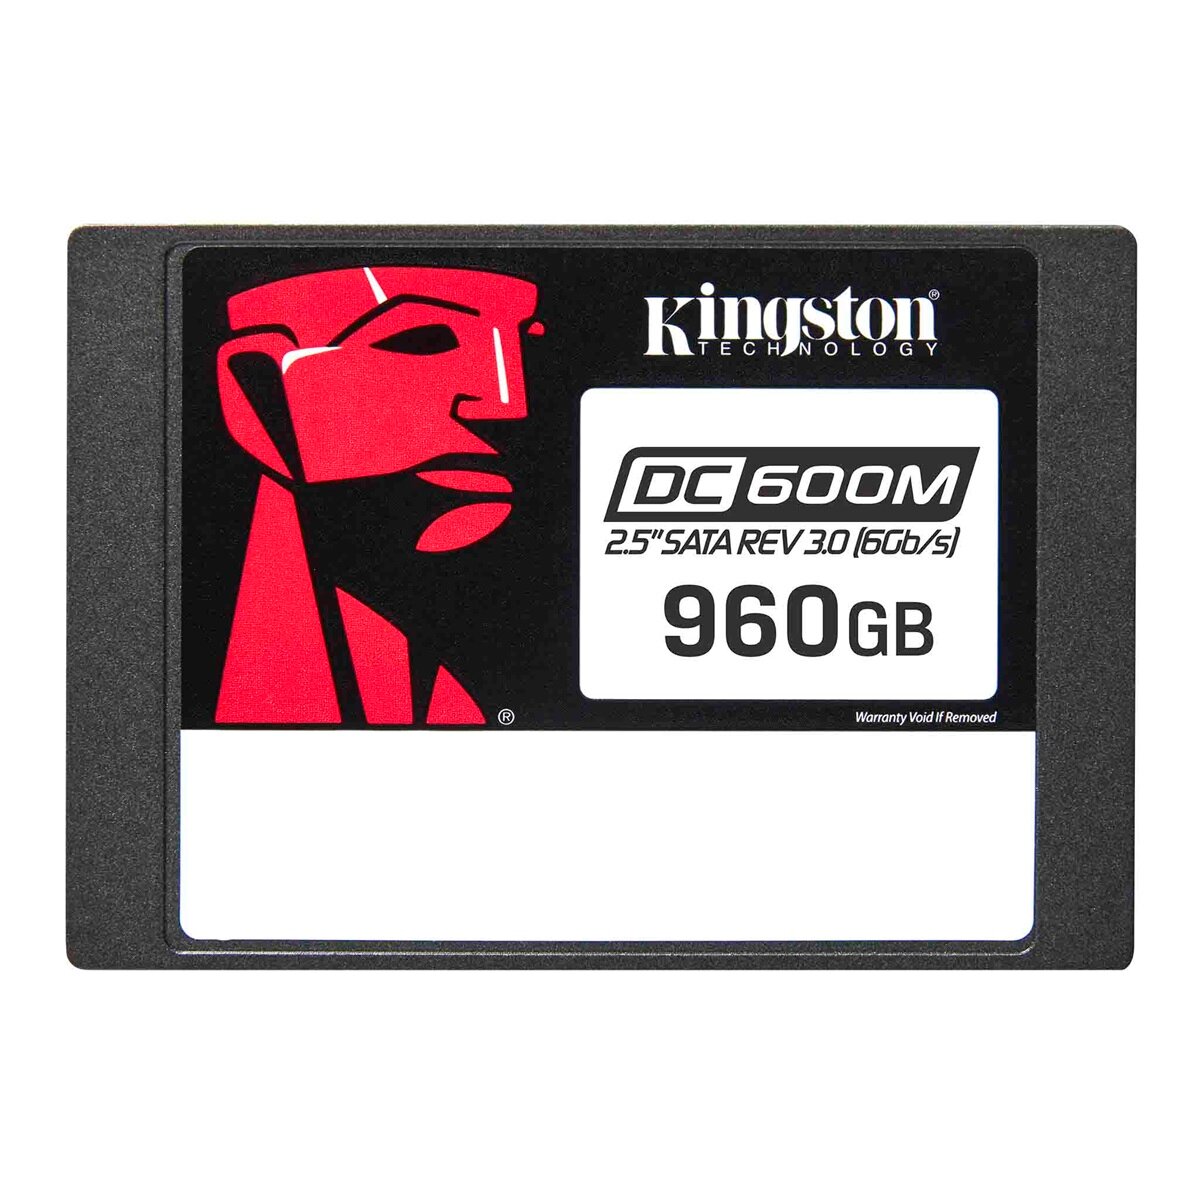 Dysk SSD Kingston SEDC600M/960G 960GB 2,5' SATA 3.0 widok od frontu na dysk